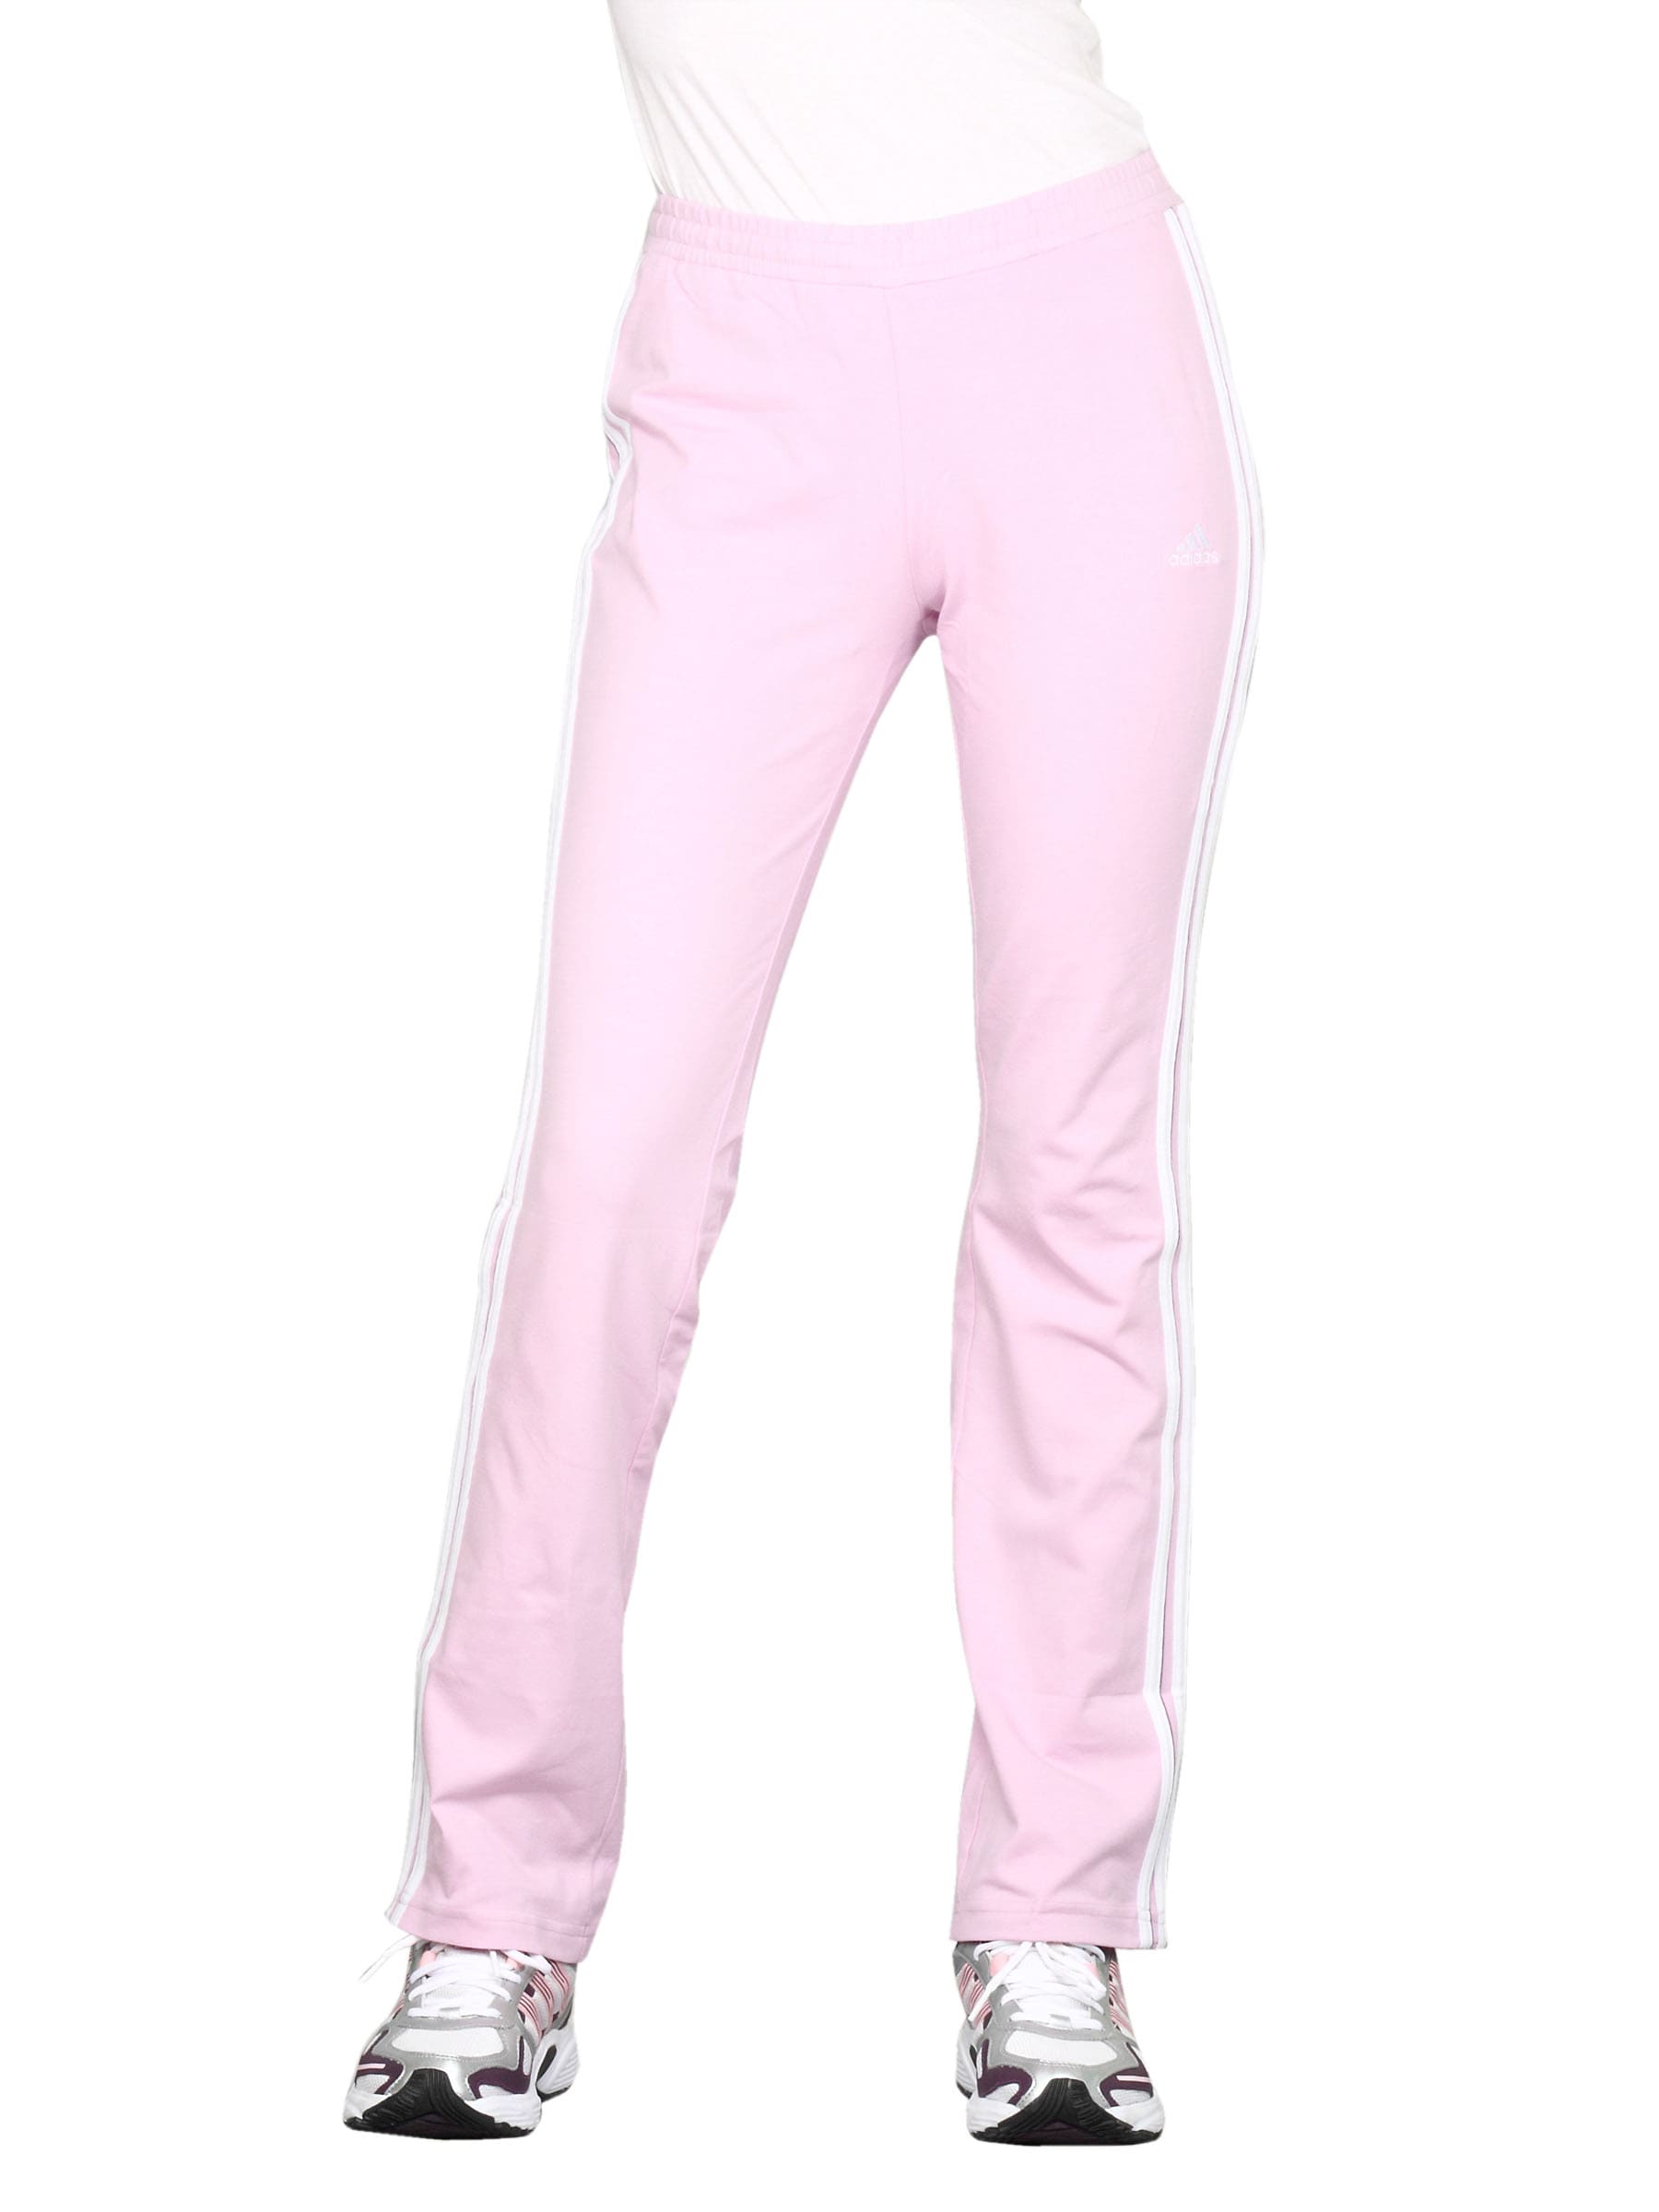 ADIDAS Women 3S Pink Track Pants